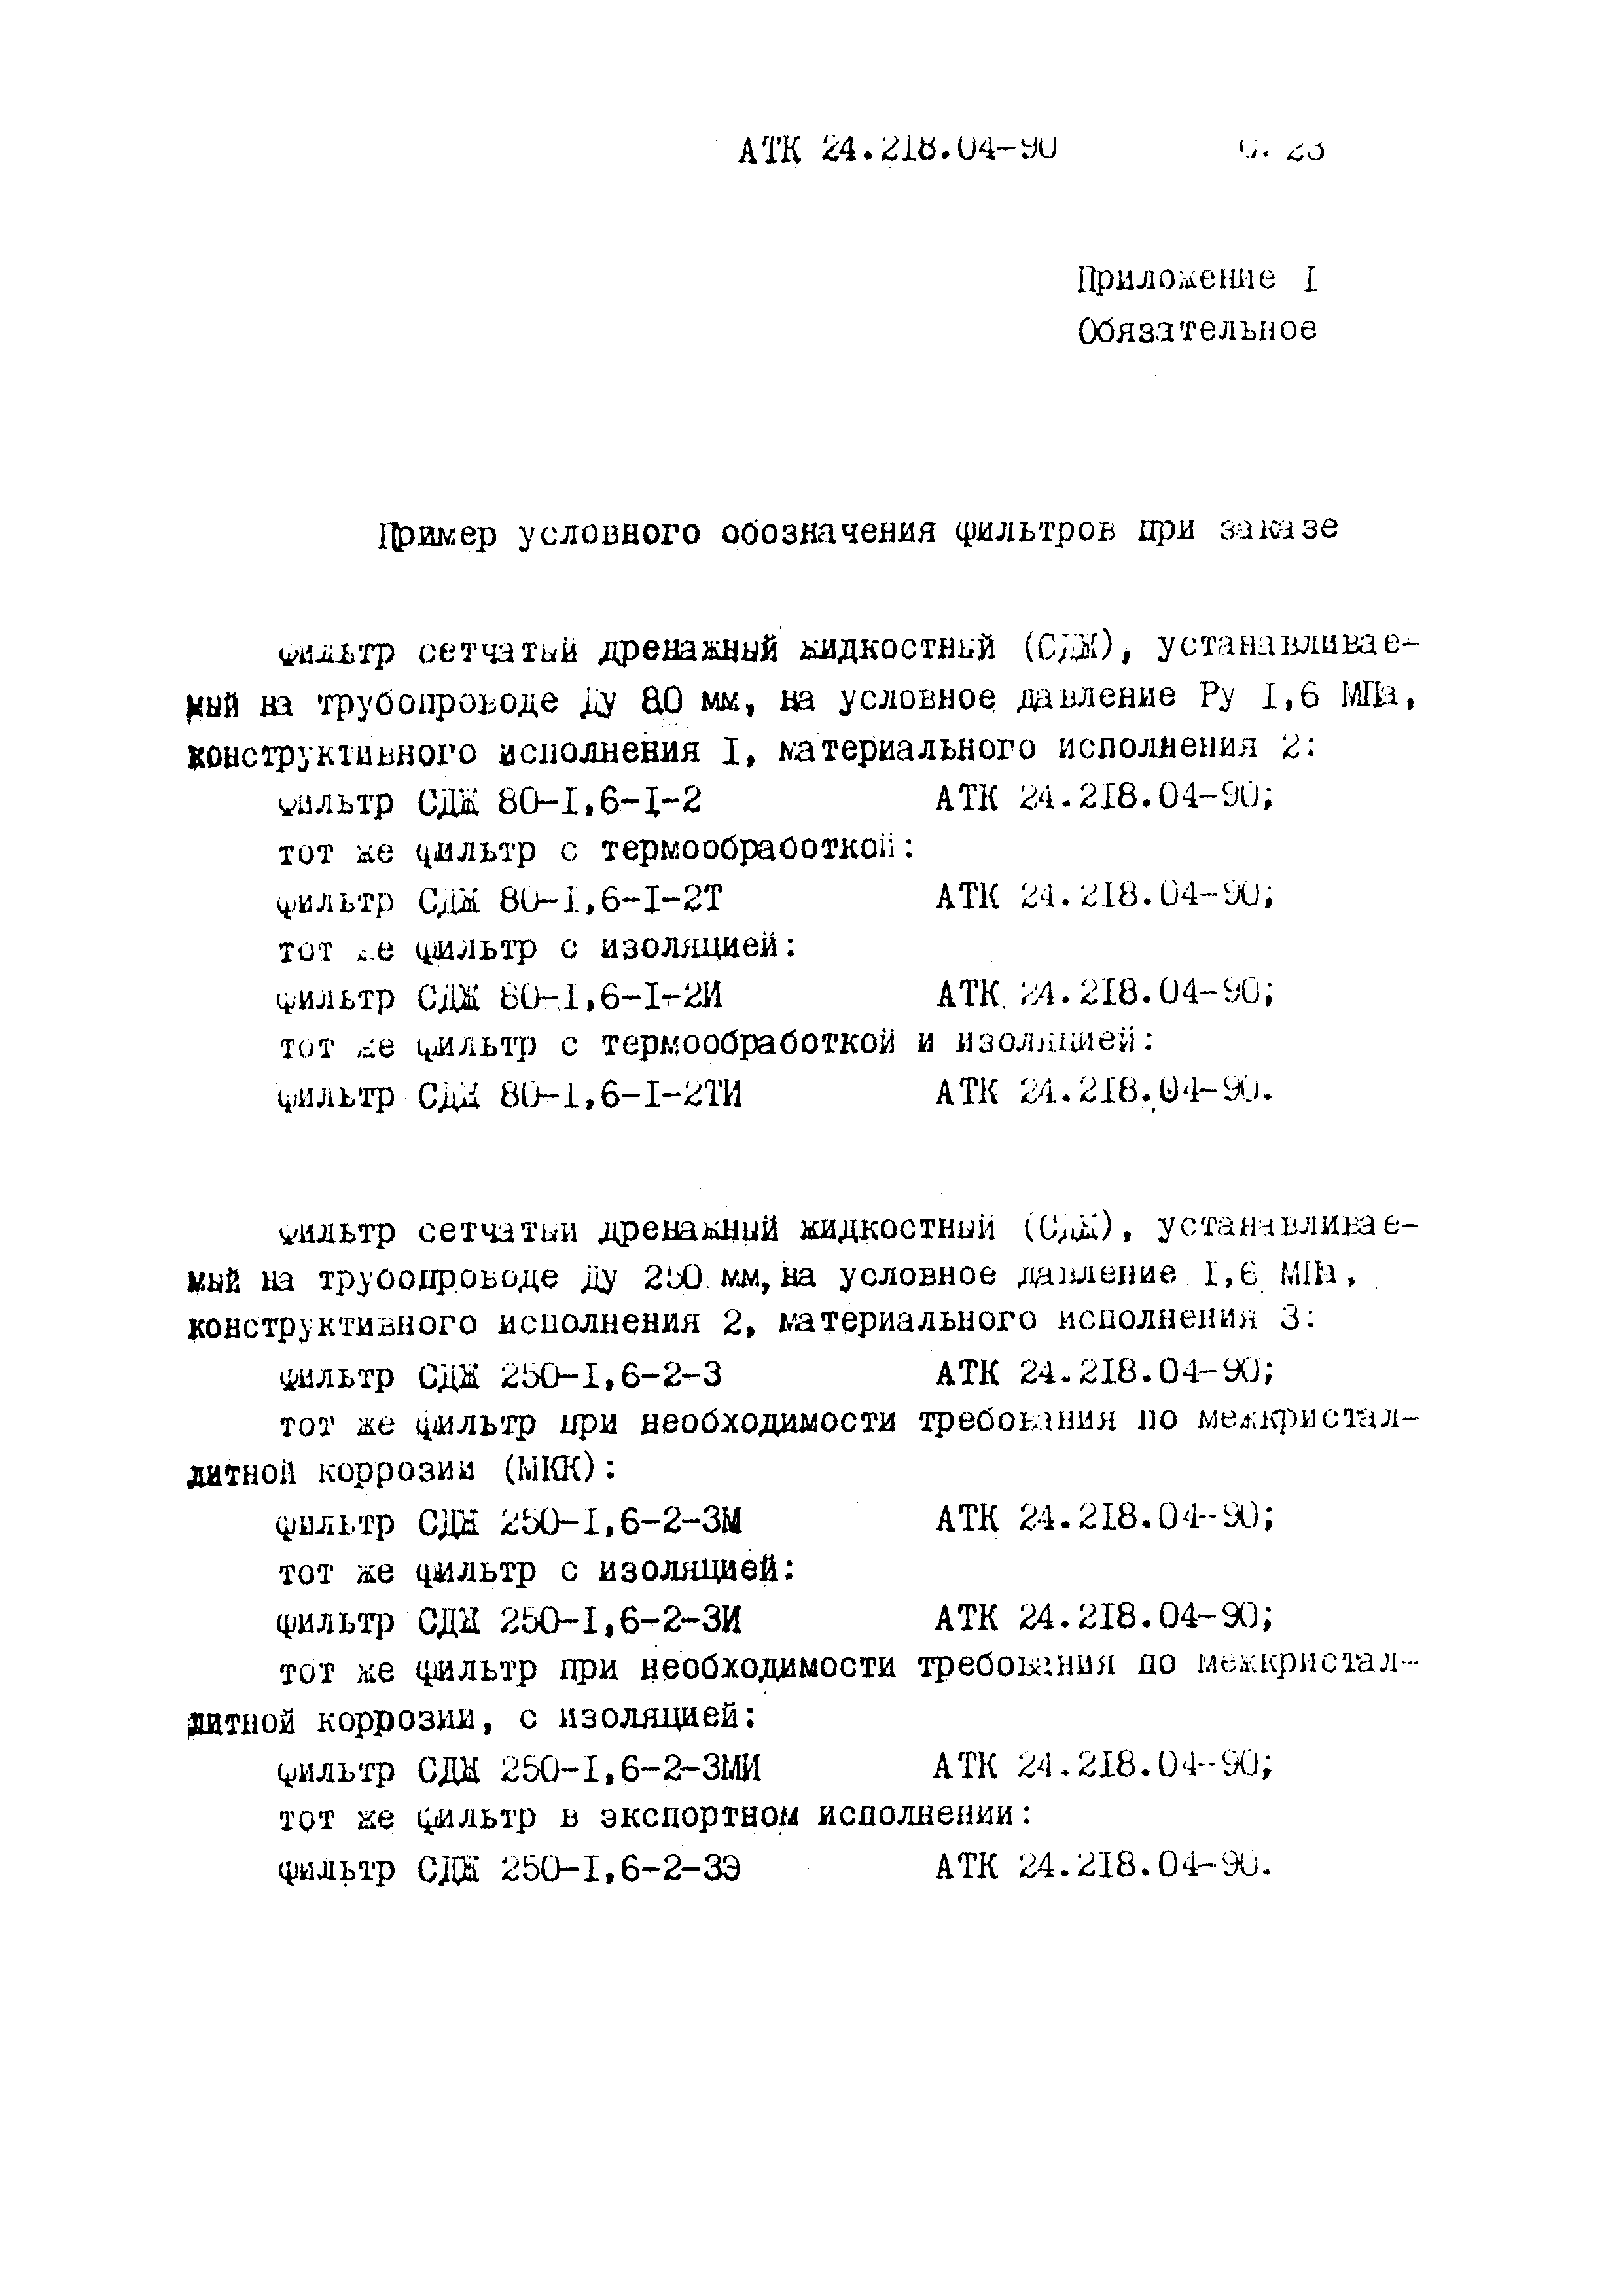 АТК 24.218.04-90